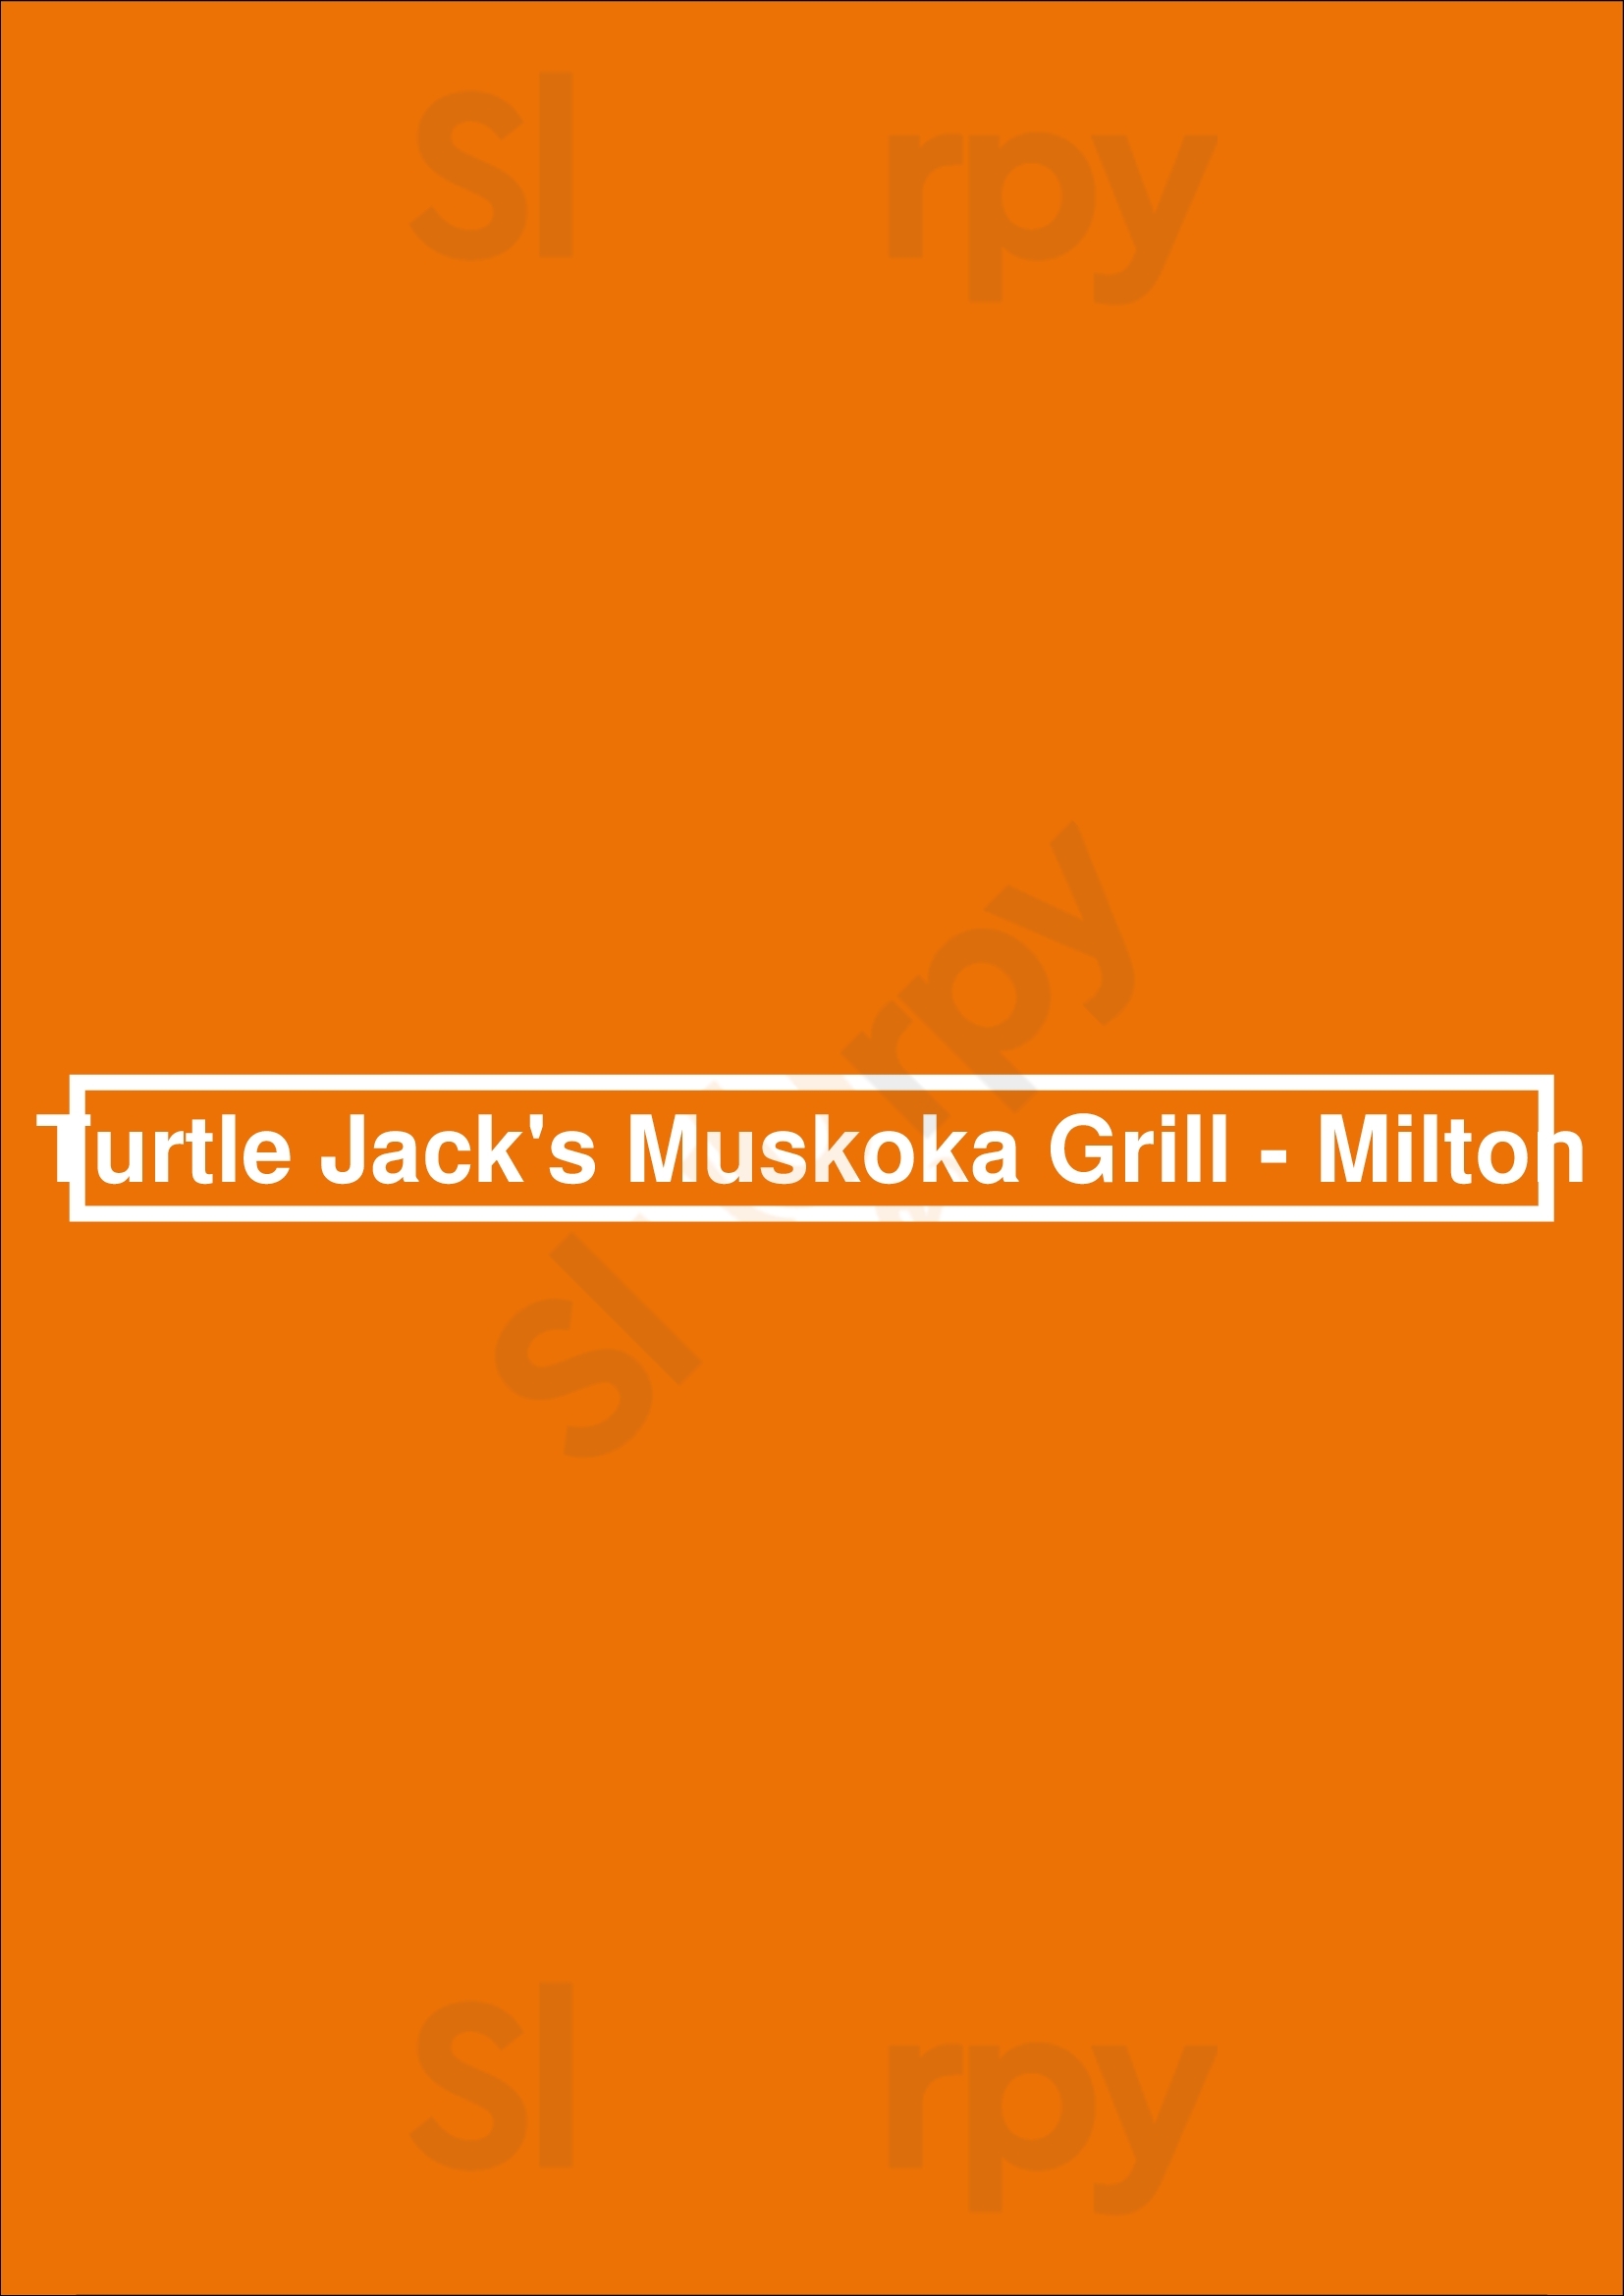 Turtle Jack's Milton Milton Menu - 1